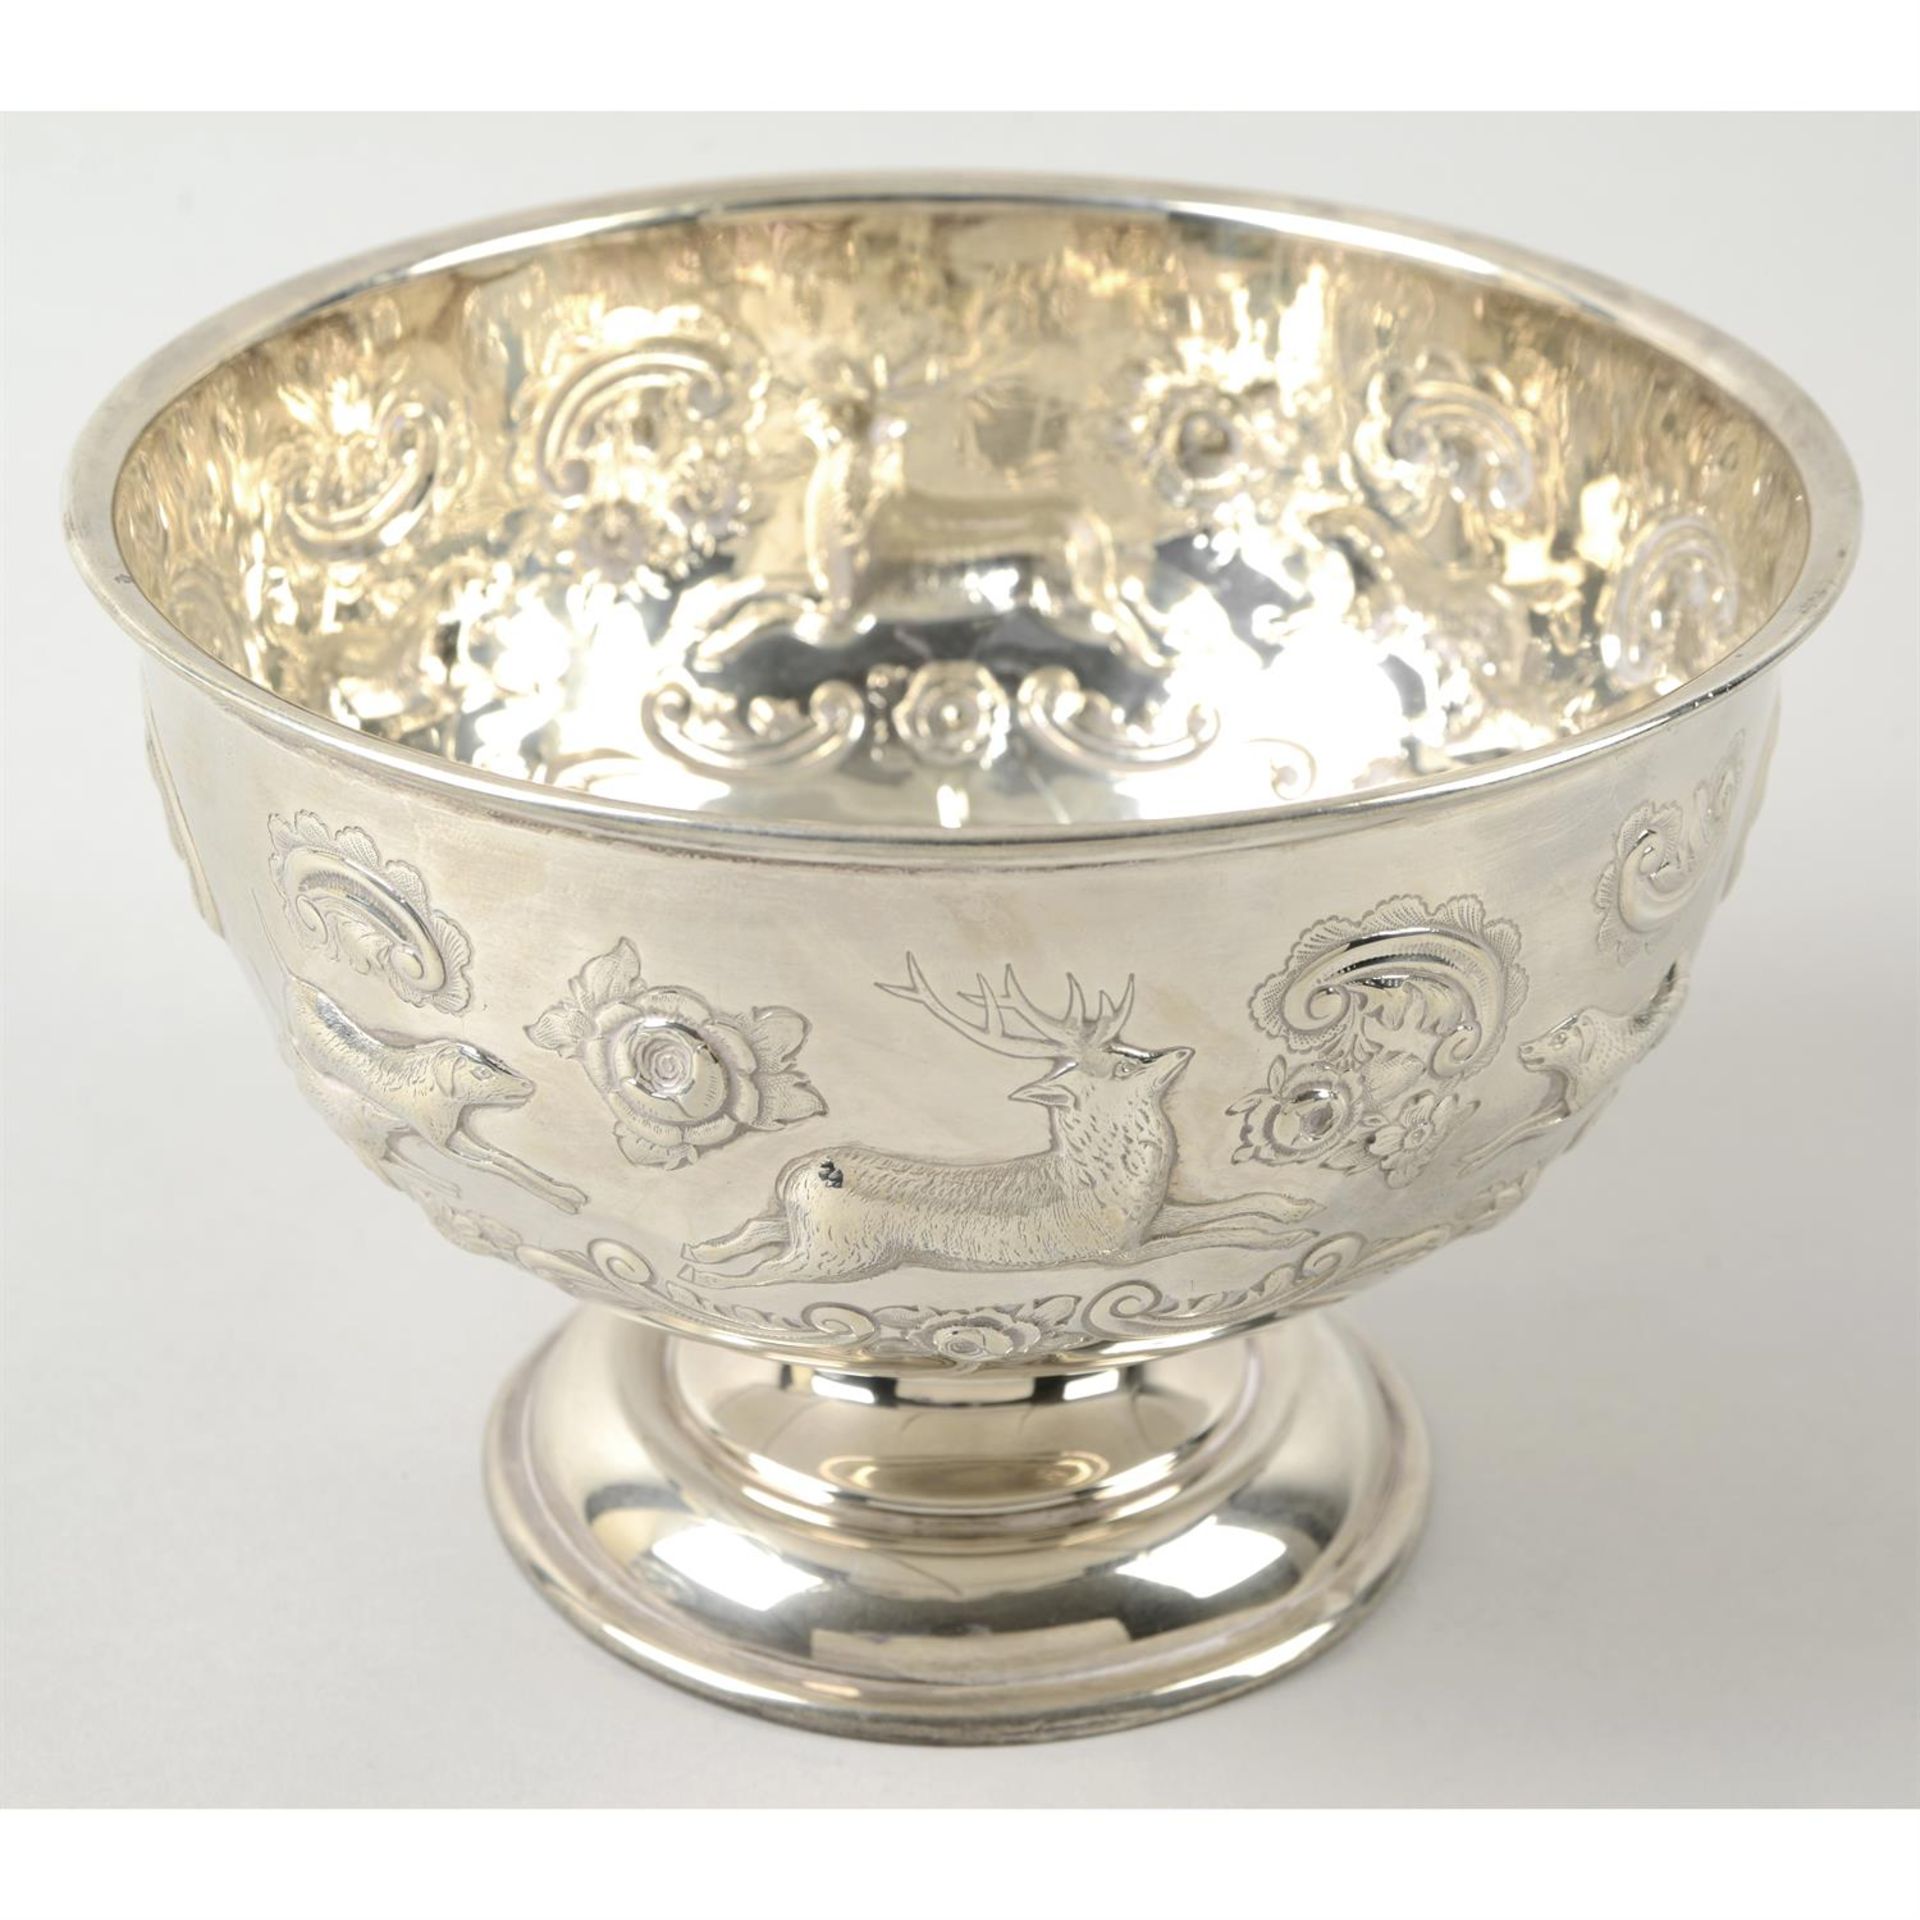 An Edwardian silver embossed pedestal bowl.